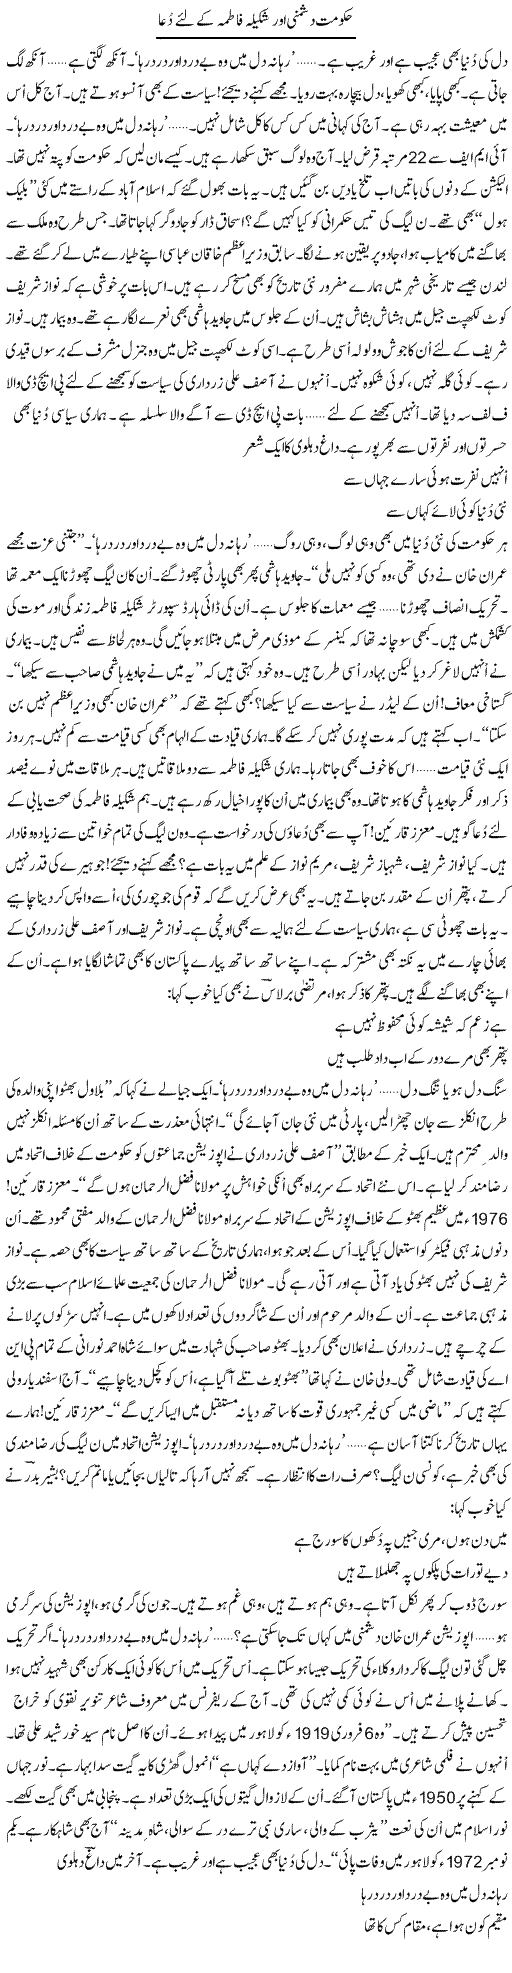 Hukumat Dushmani Aur Shakila Fatima Ke Liye Dua | Ejaz Hafeez Khan | Daily Urdu Columns